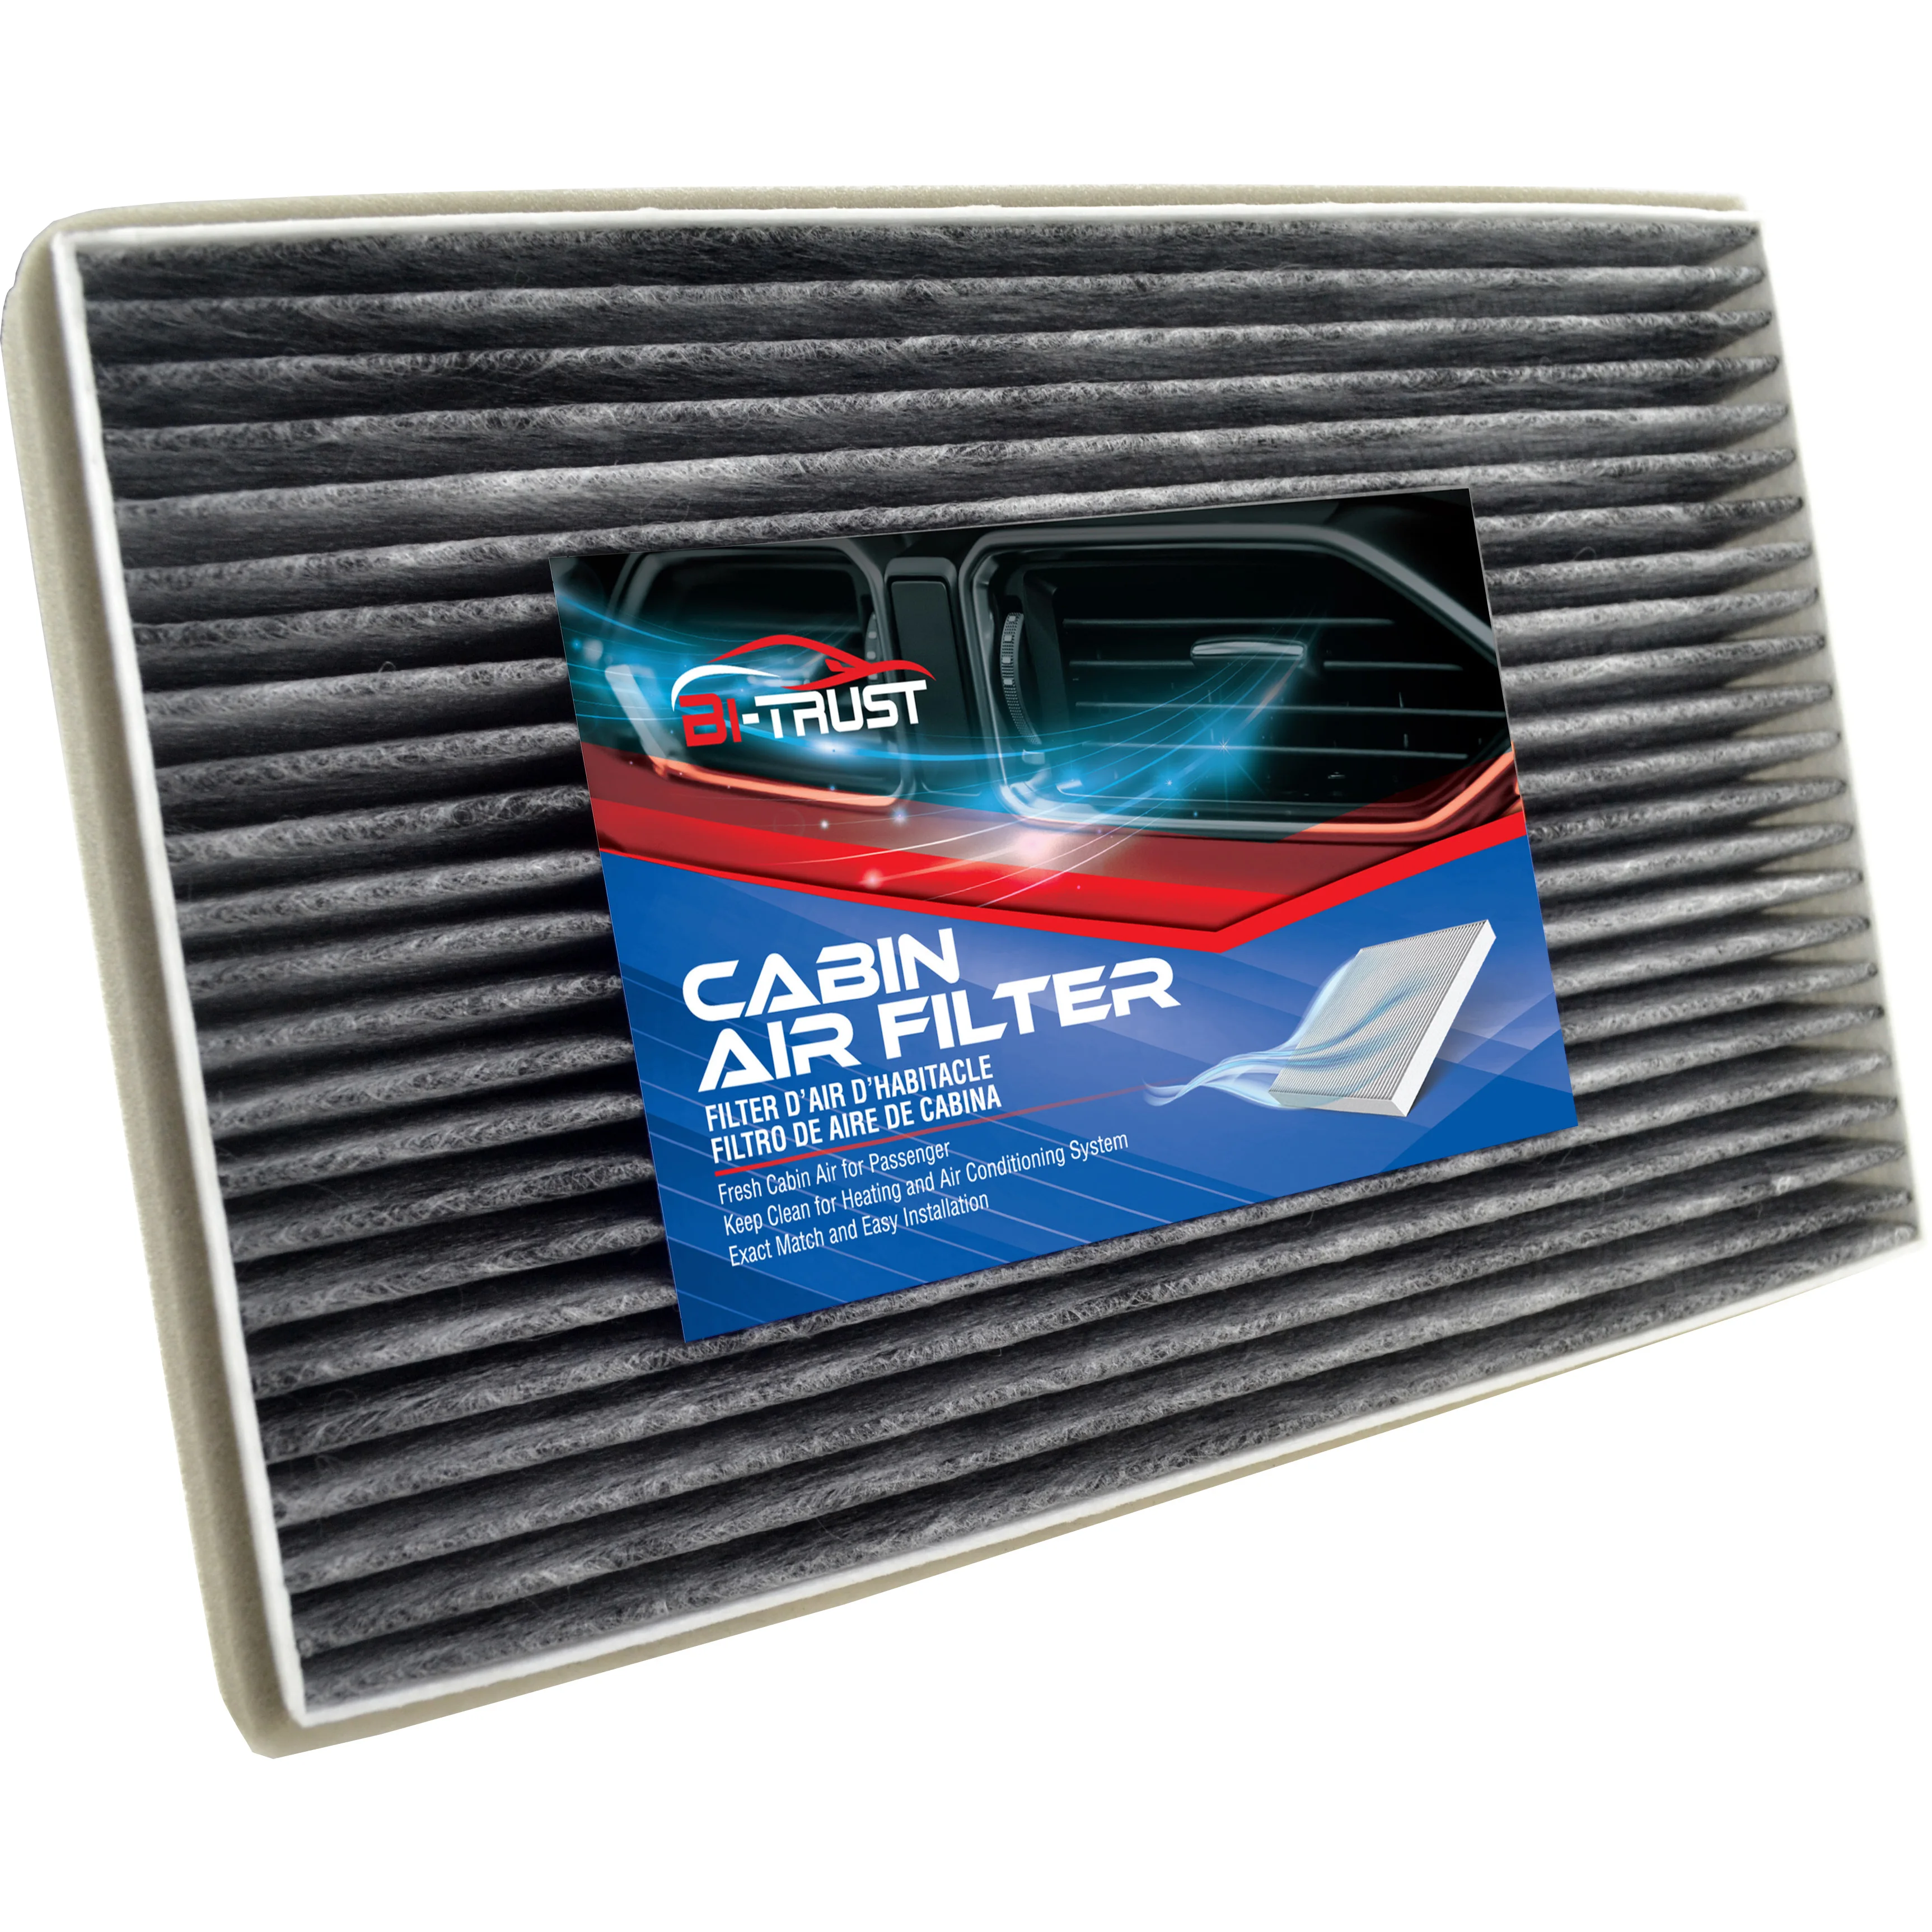 

Bi-Trust Cabin Air Filter for Buick Allure/Century/Lacrosse/Regal Chevrolet Impala/Monte Carlo/Oldsmobile Intrigue/Pontiac